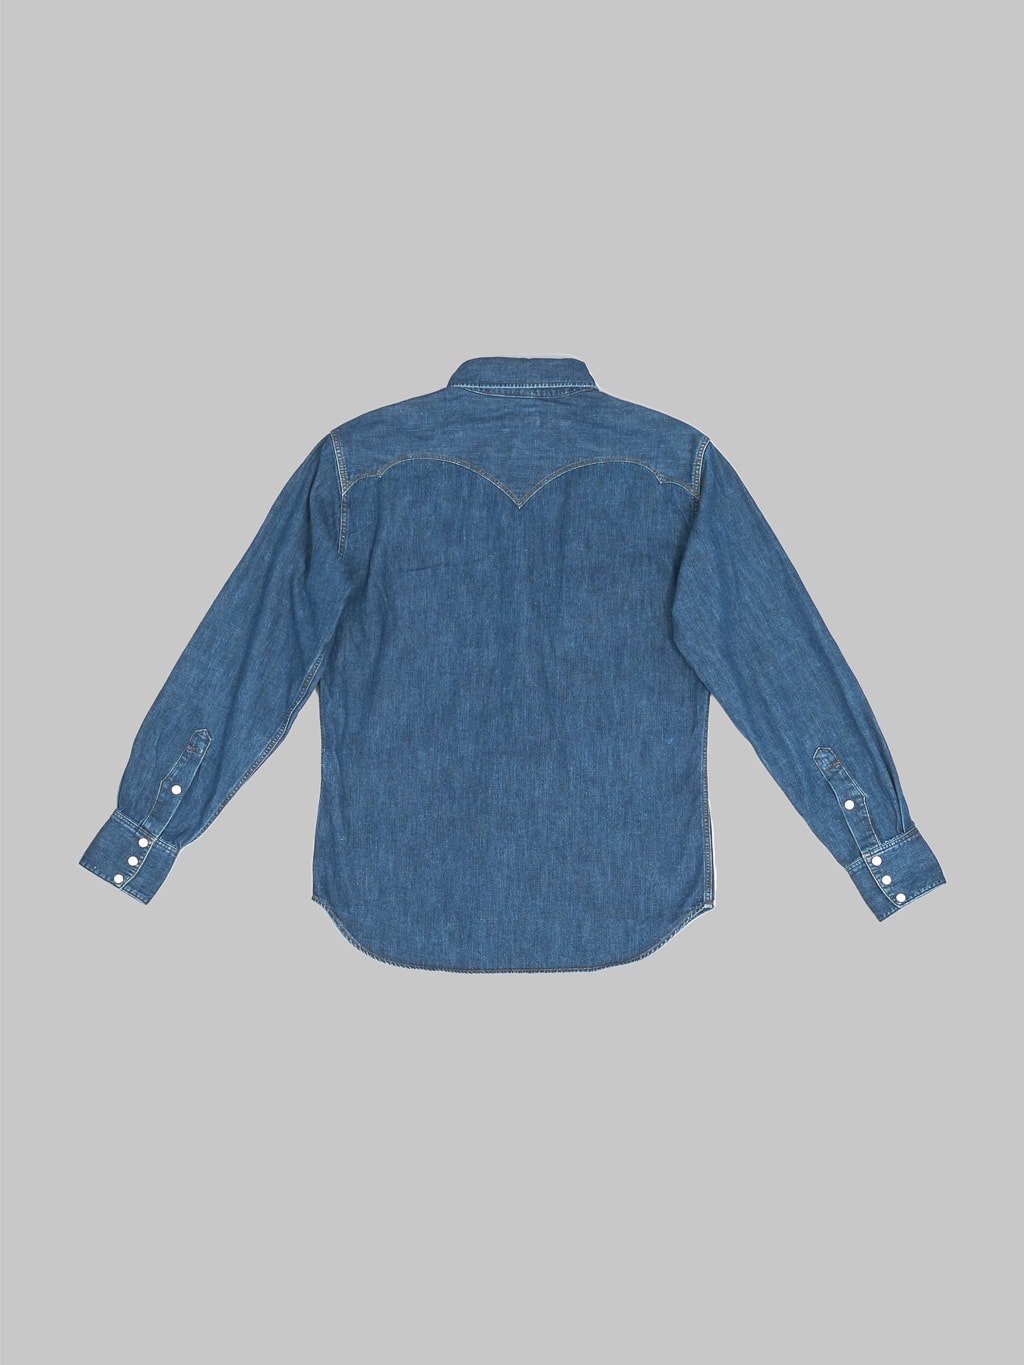 Stevenson overall cody shirt faded indigo denim back view